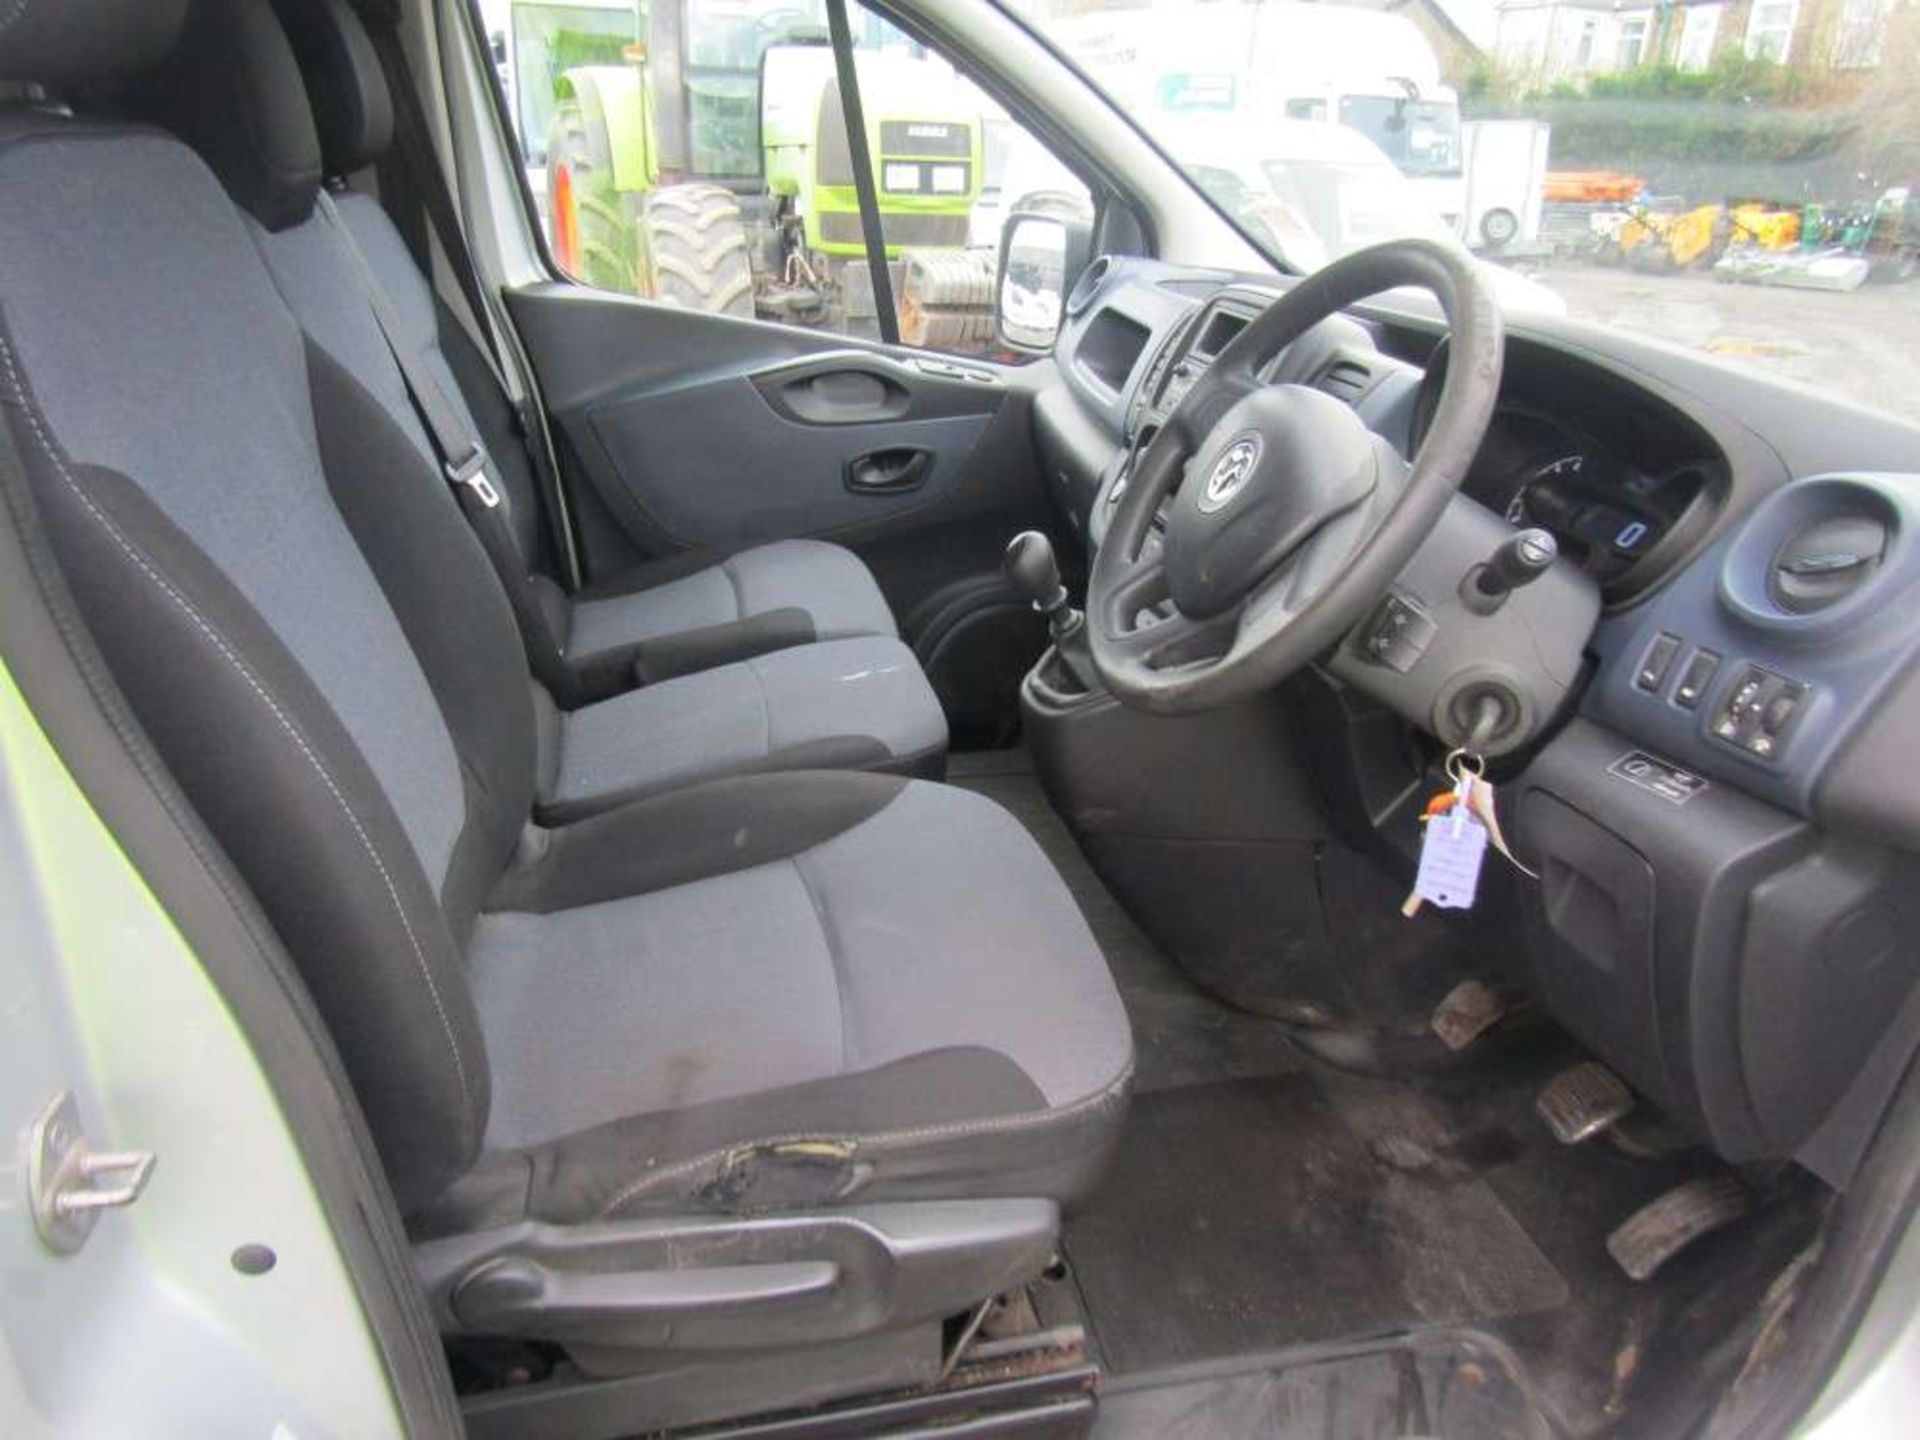 2014 64 reg Vauxhall Vivaro 2900 CDTI Ecoflex - Image 6 of 7